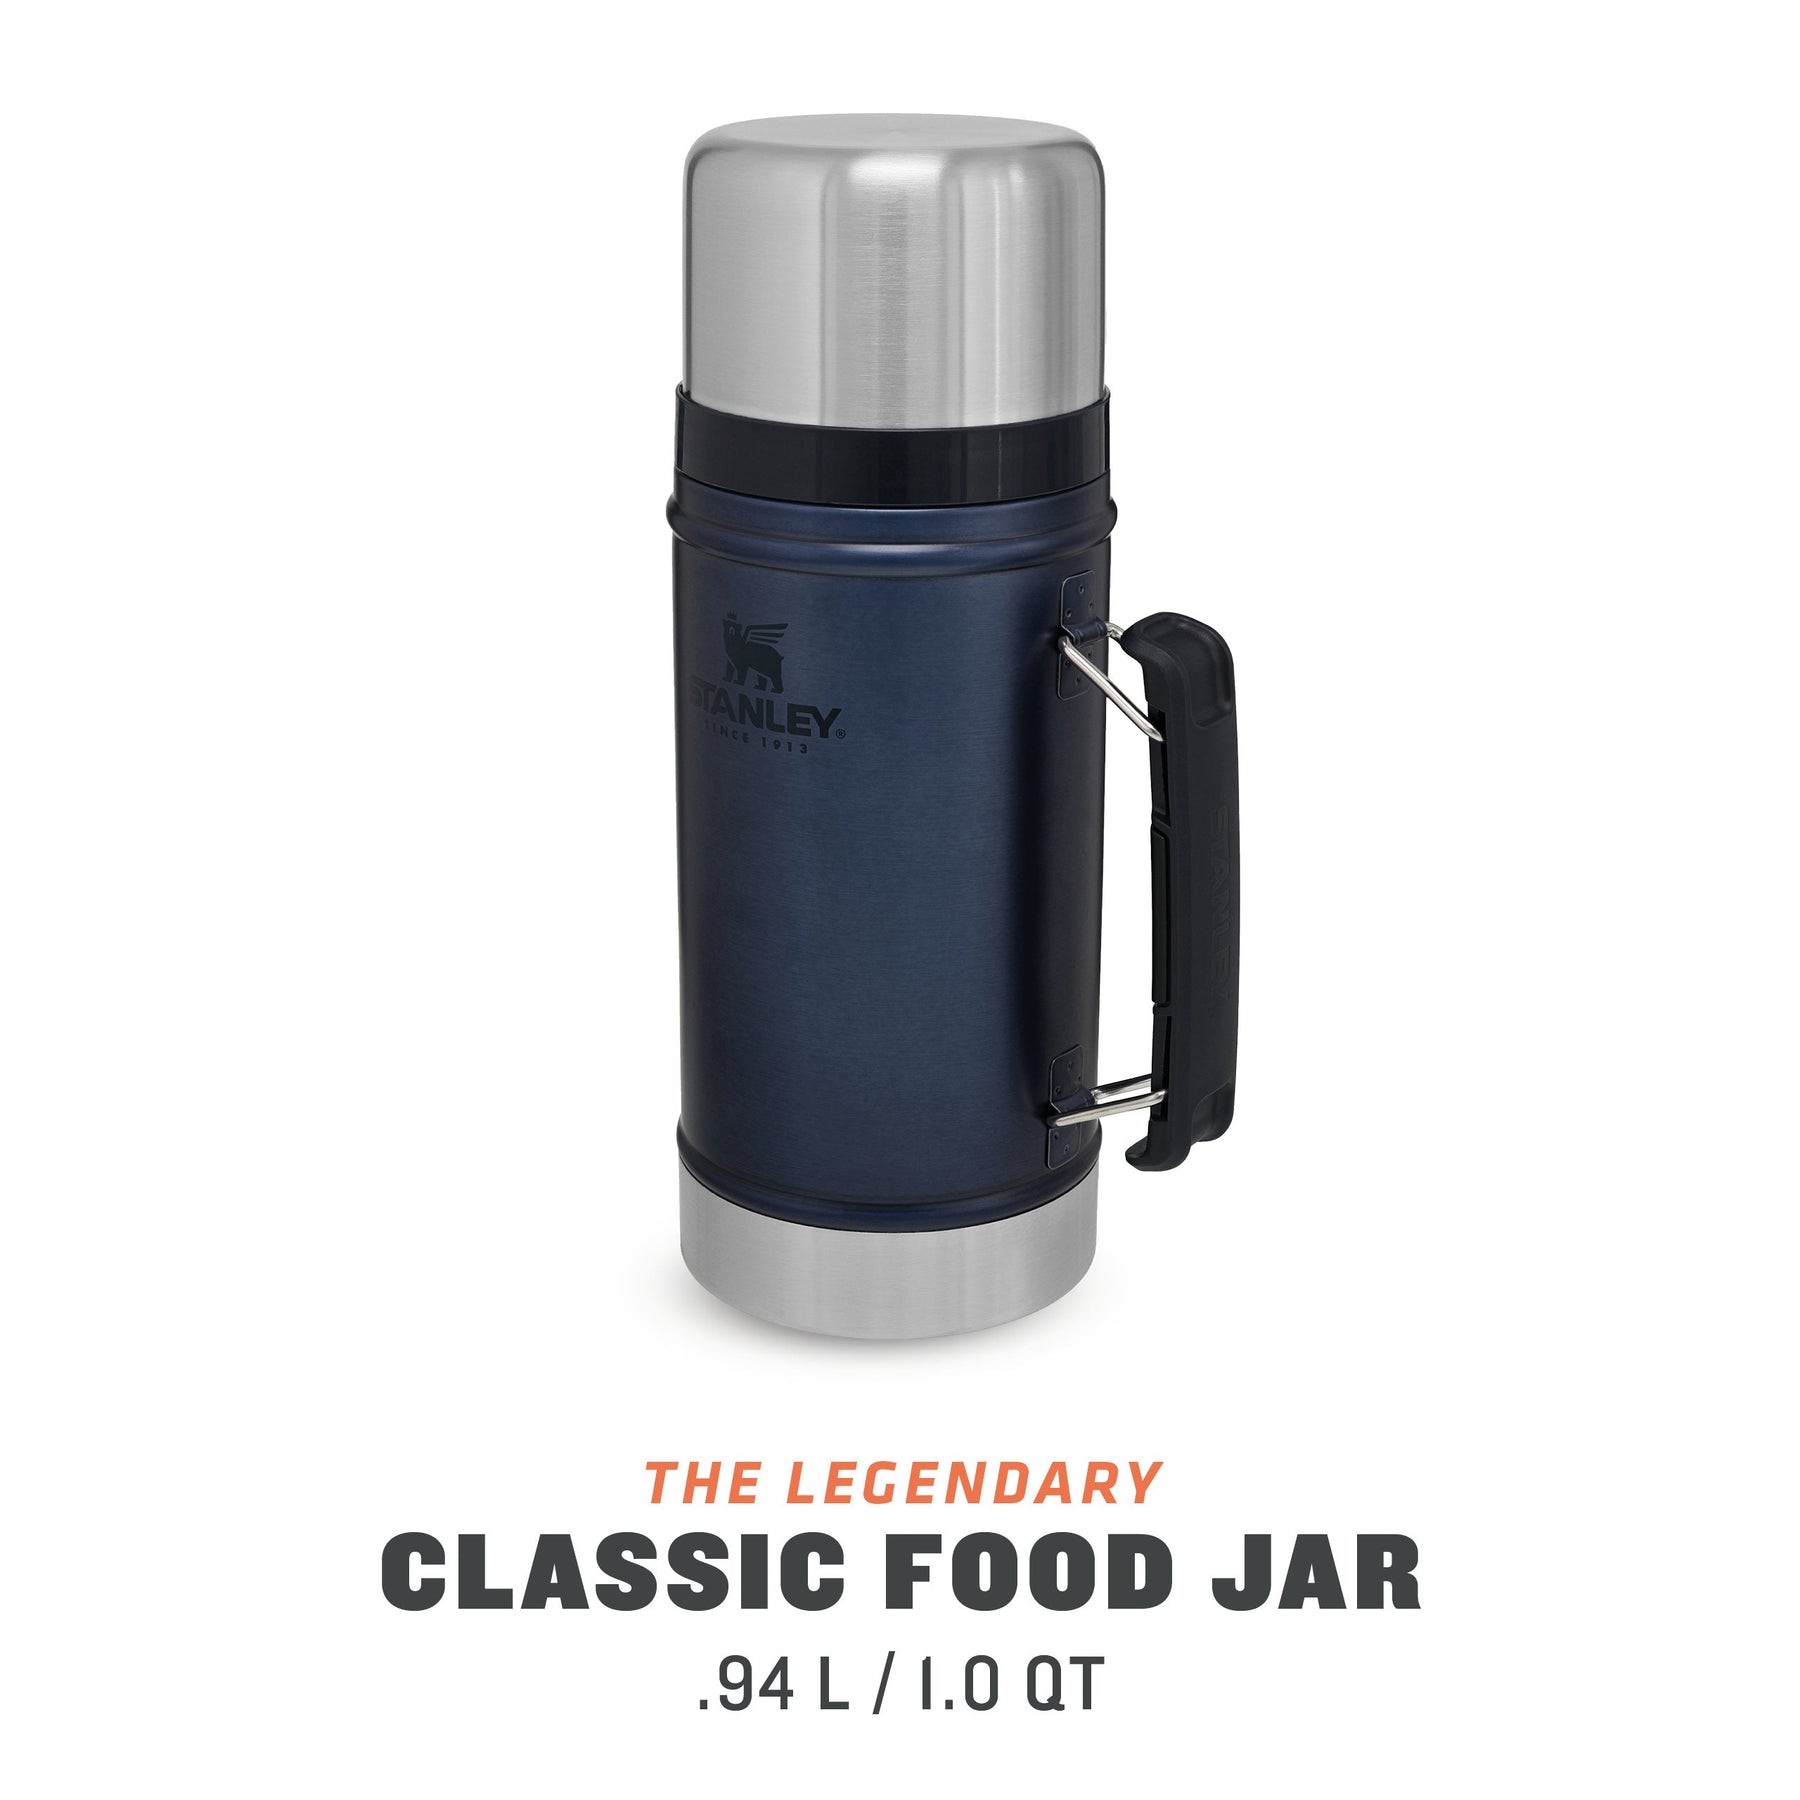 Classic Legendary Food Jar | 1.0 QT